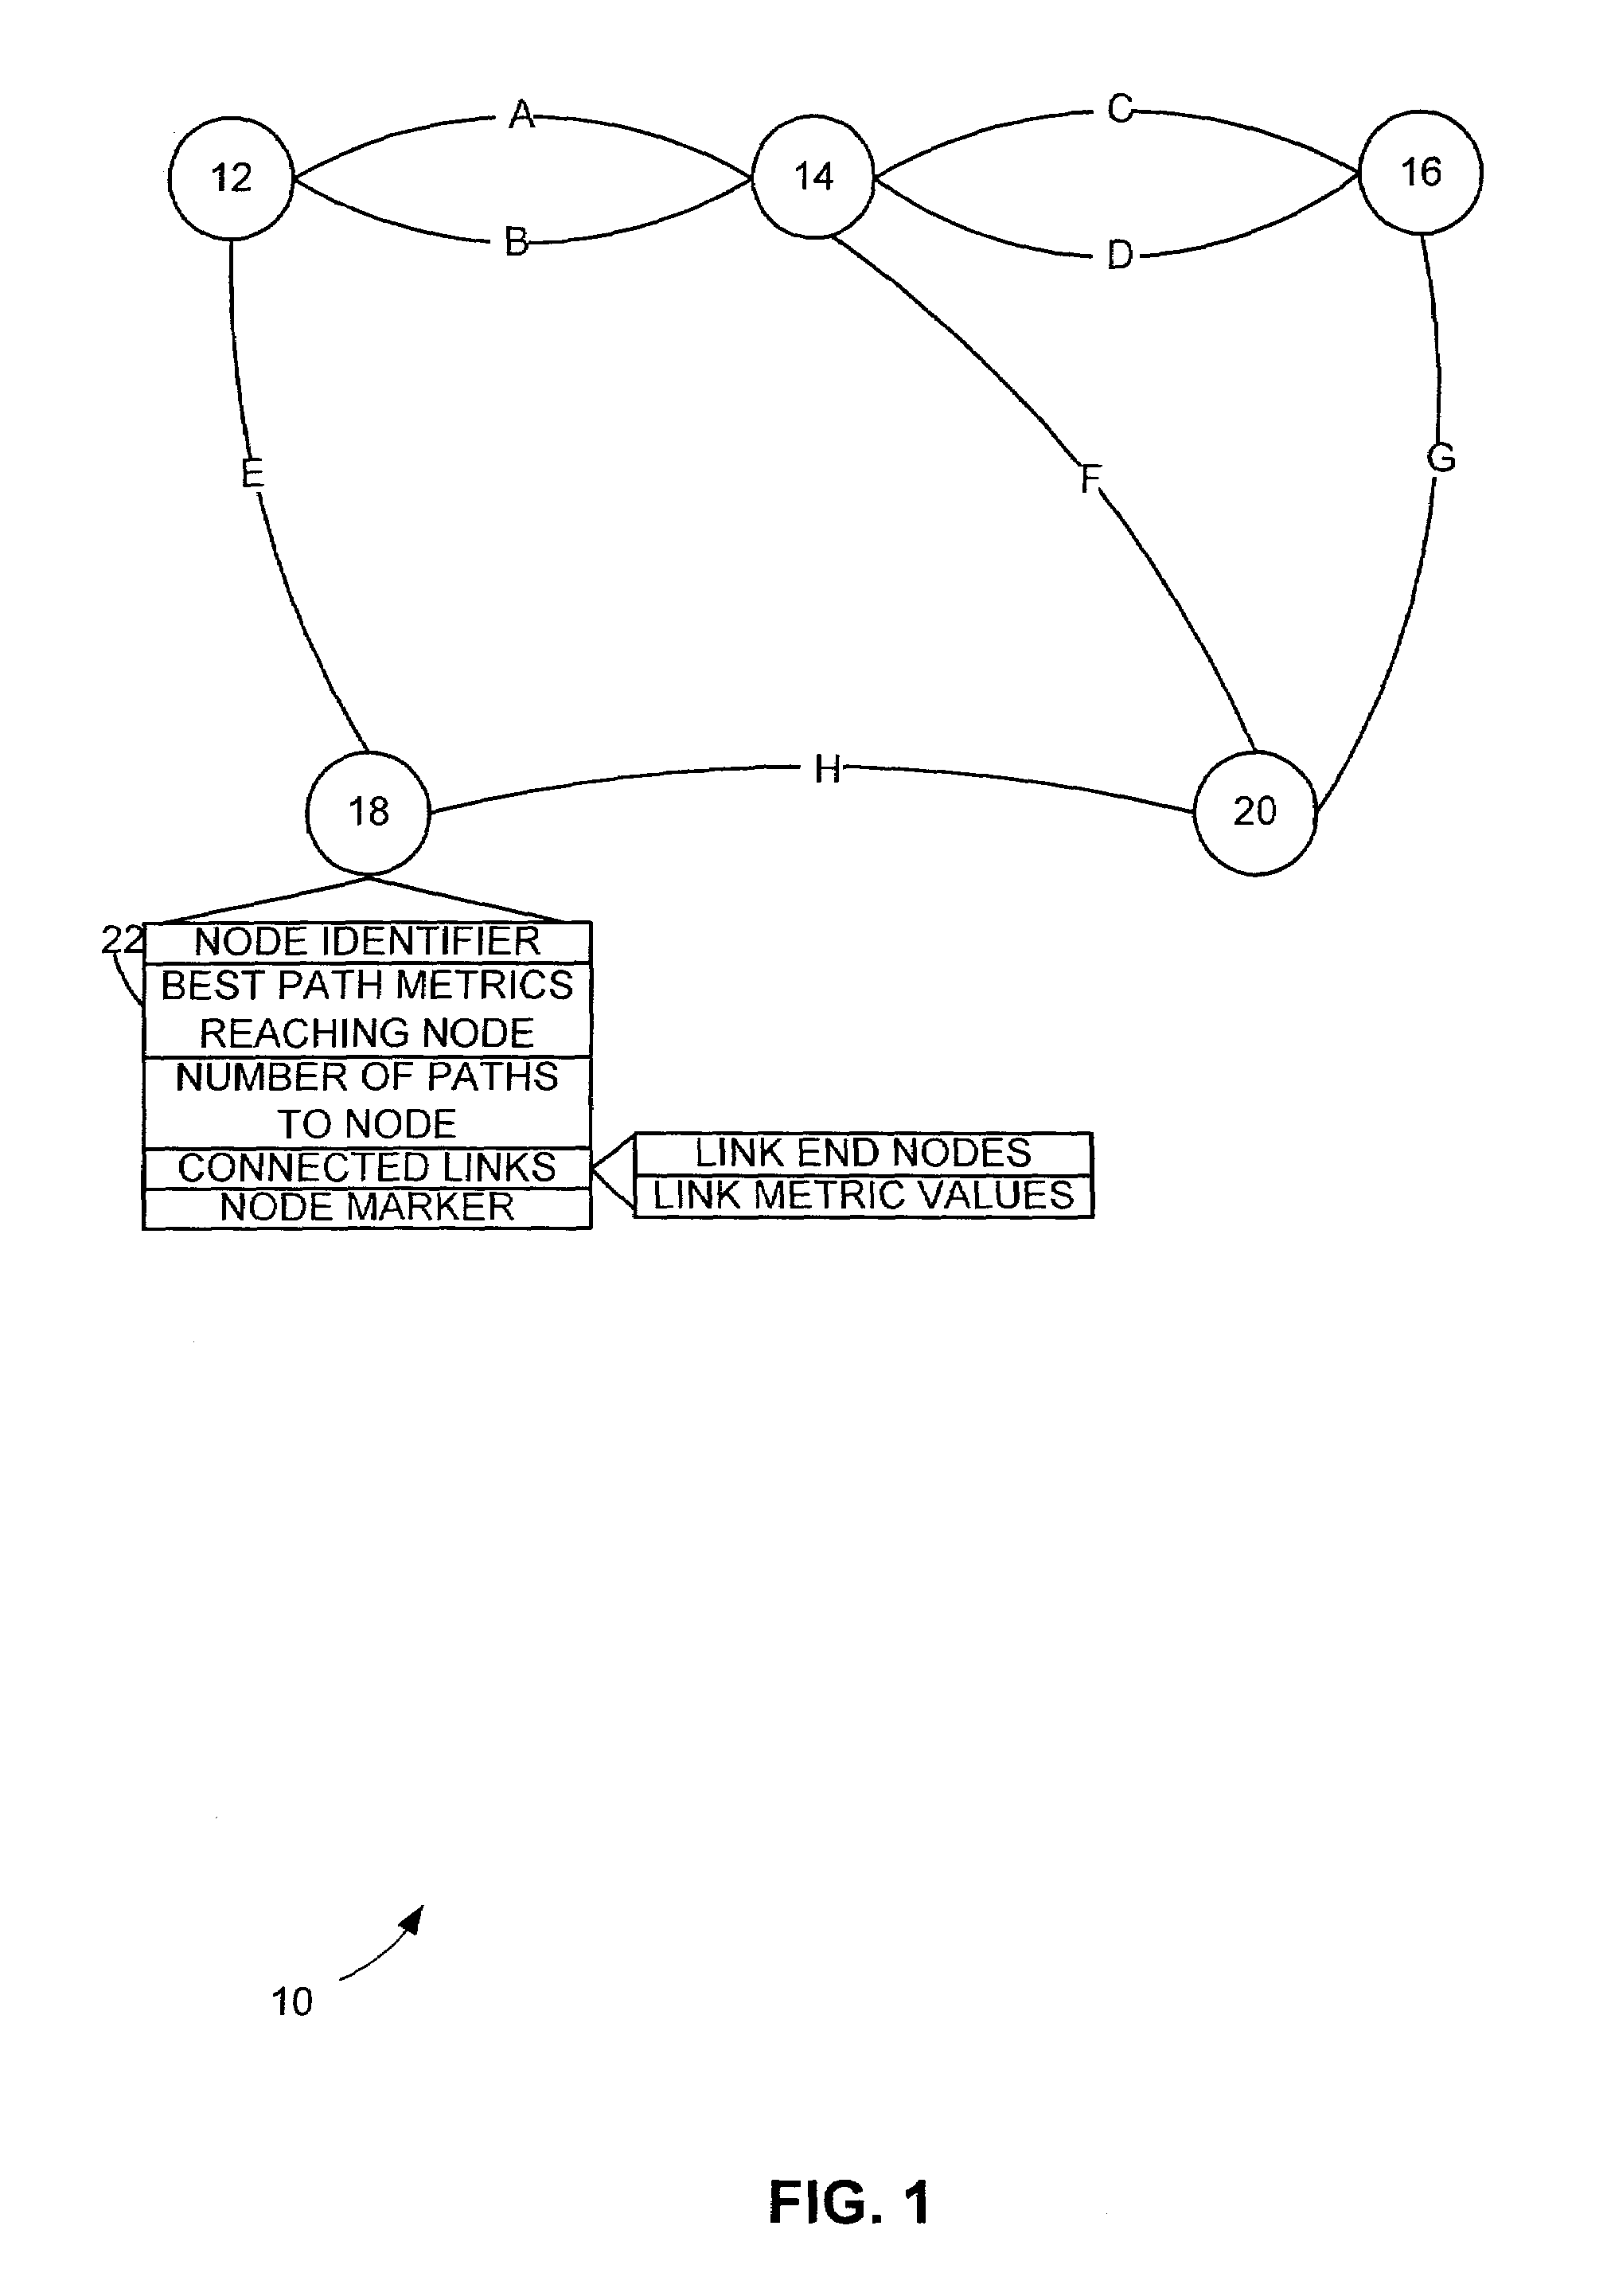 Network path selection based on bandwidth